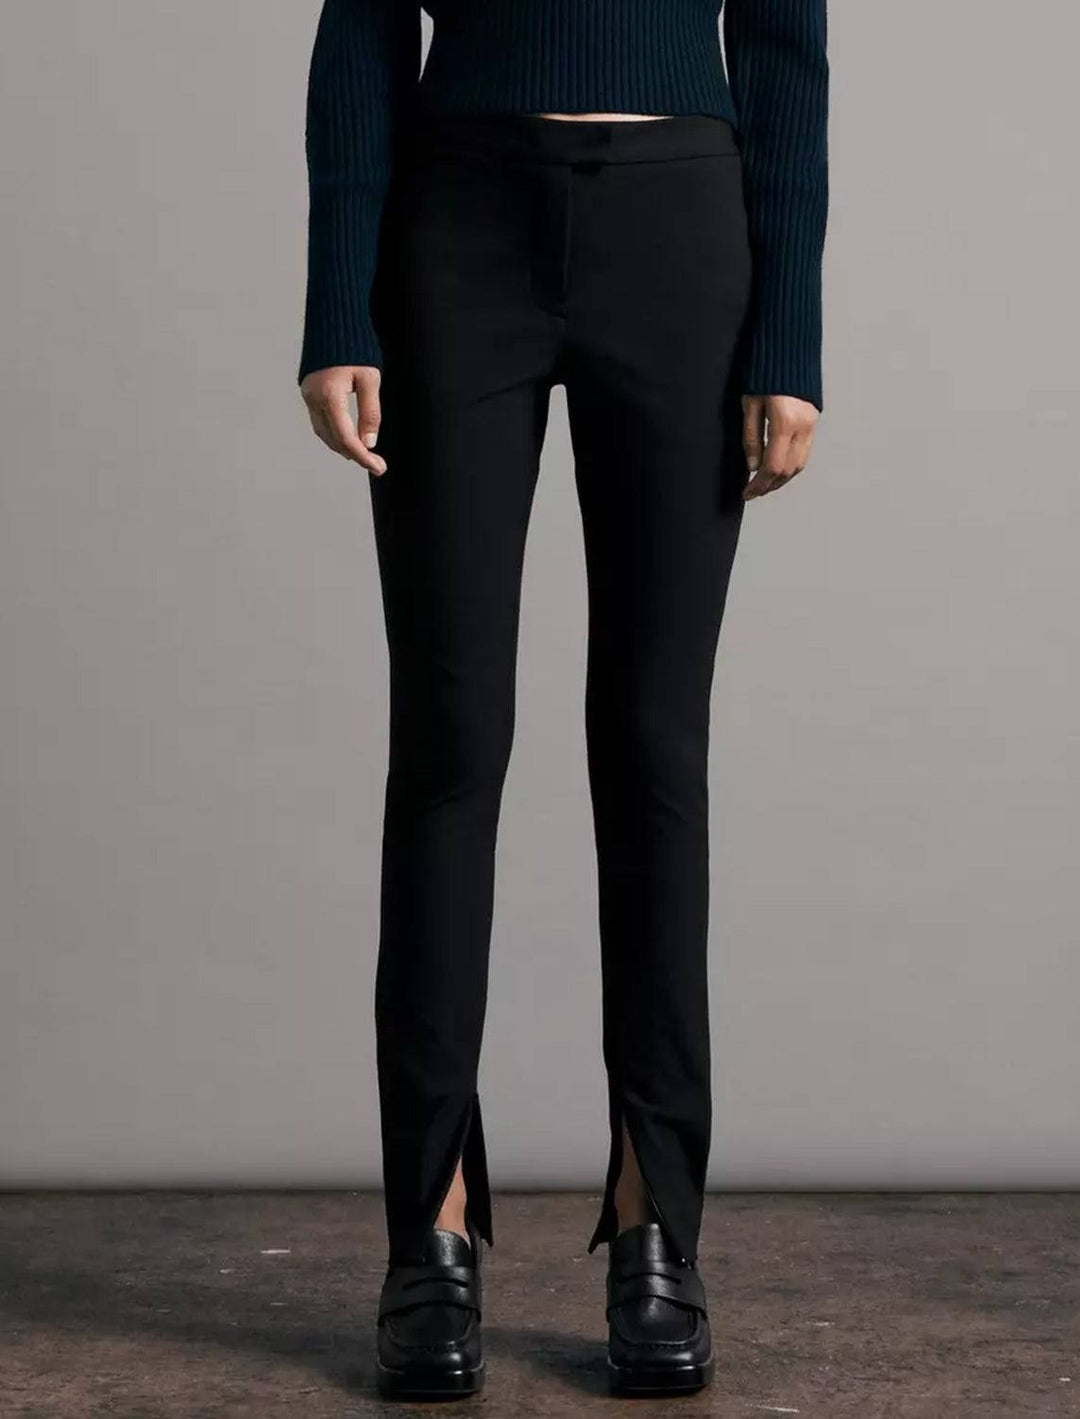 Model wearing Rag & Bone's rebecca pant in black.